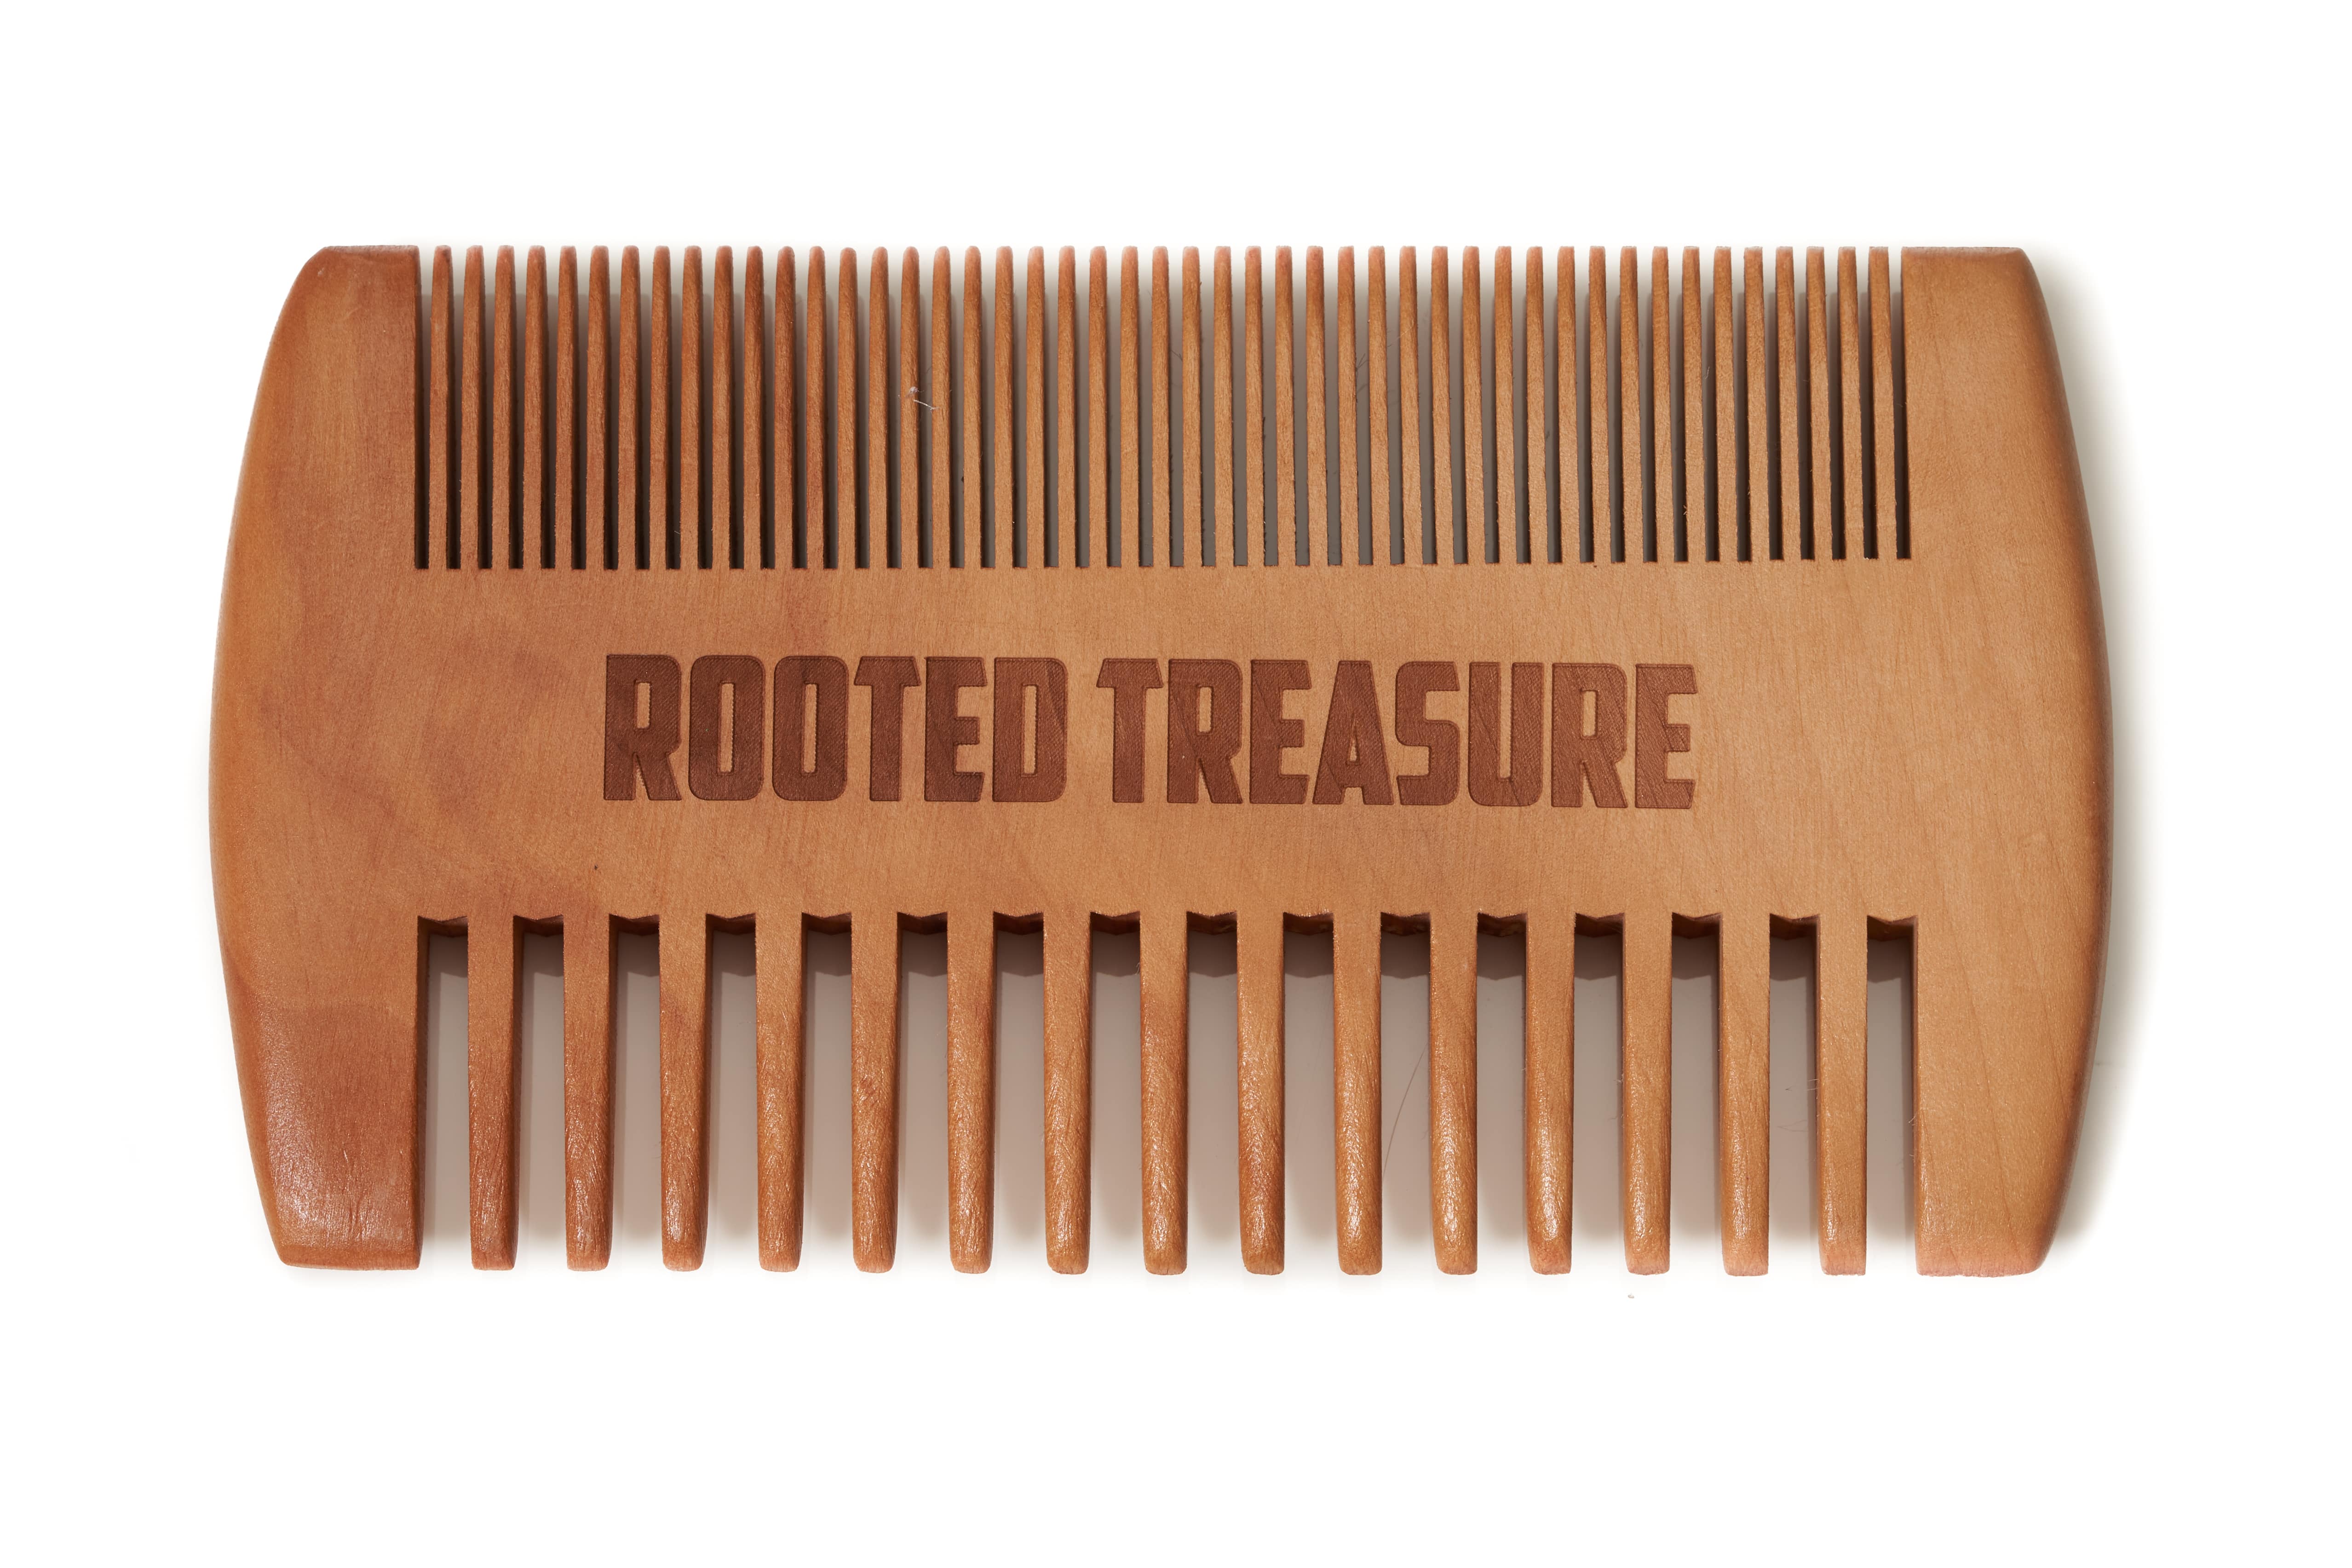 Rooted Treasure Beard Care